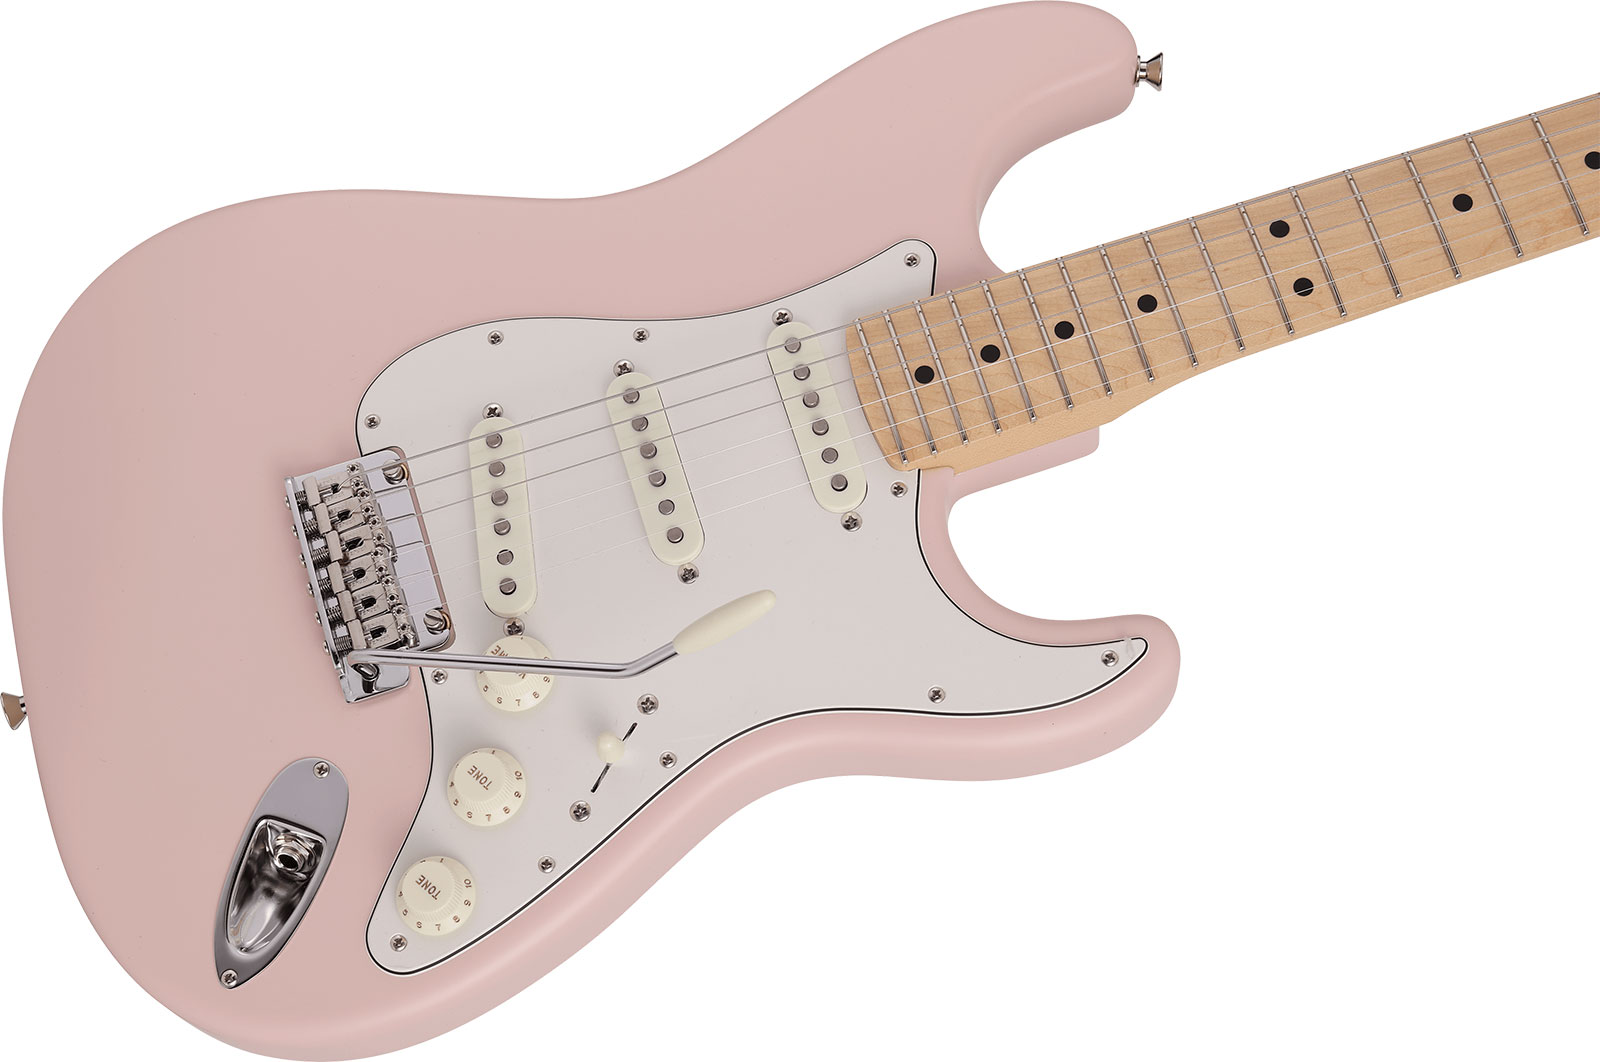 Fender Strat Junior Mij Jap 3s Trem Rw - Satin Shell Pink - Guitarra eléctrica para niños - Variation 2